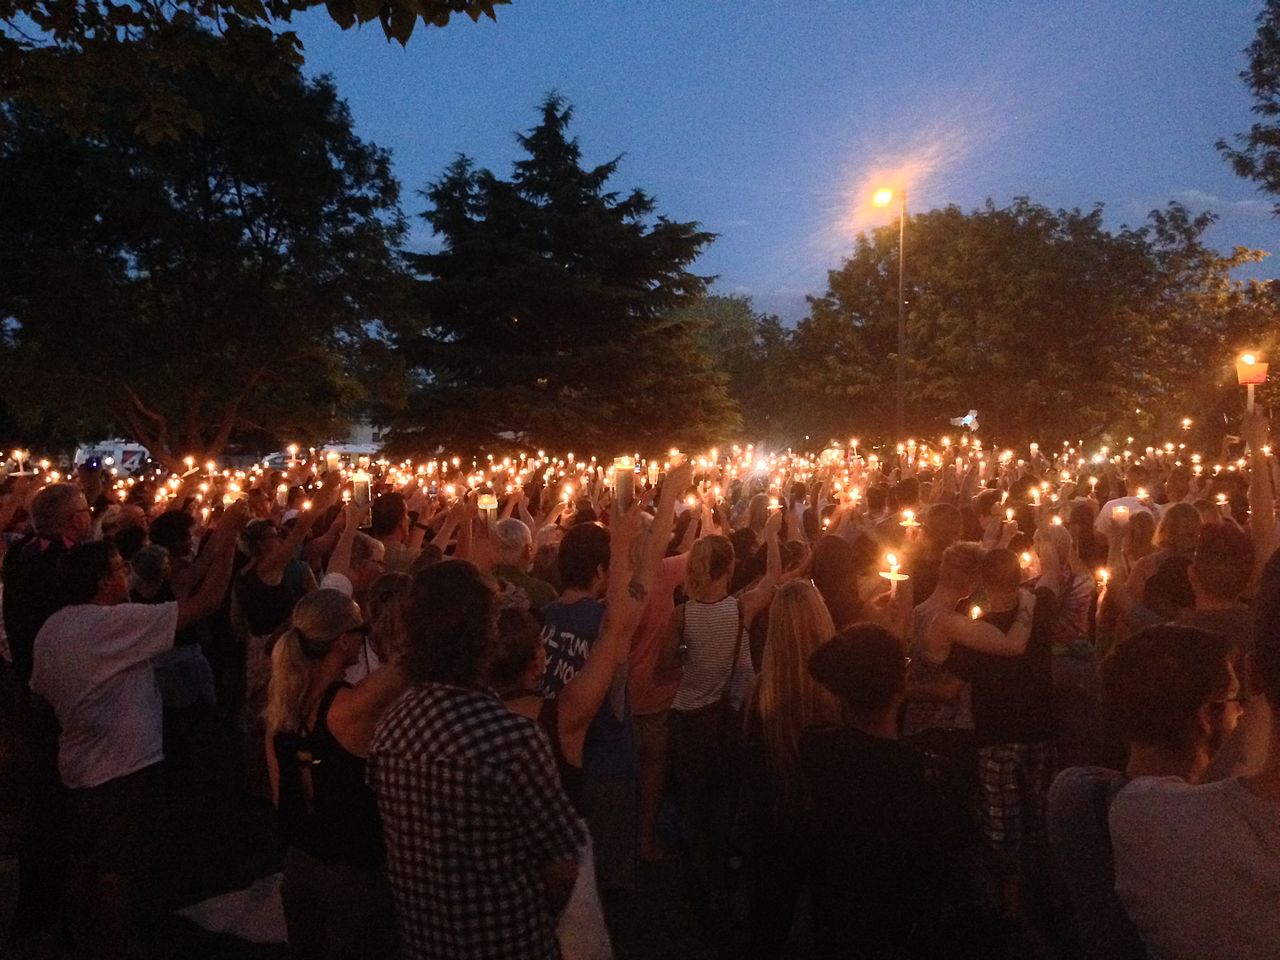 Candlelight vigil for the Orlando nightclub shooting held in Albuquerque, New Mexico (PHOTO by Kaldari)